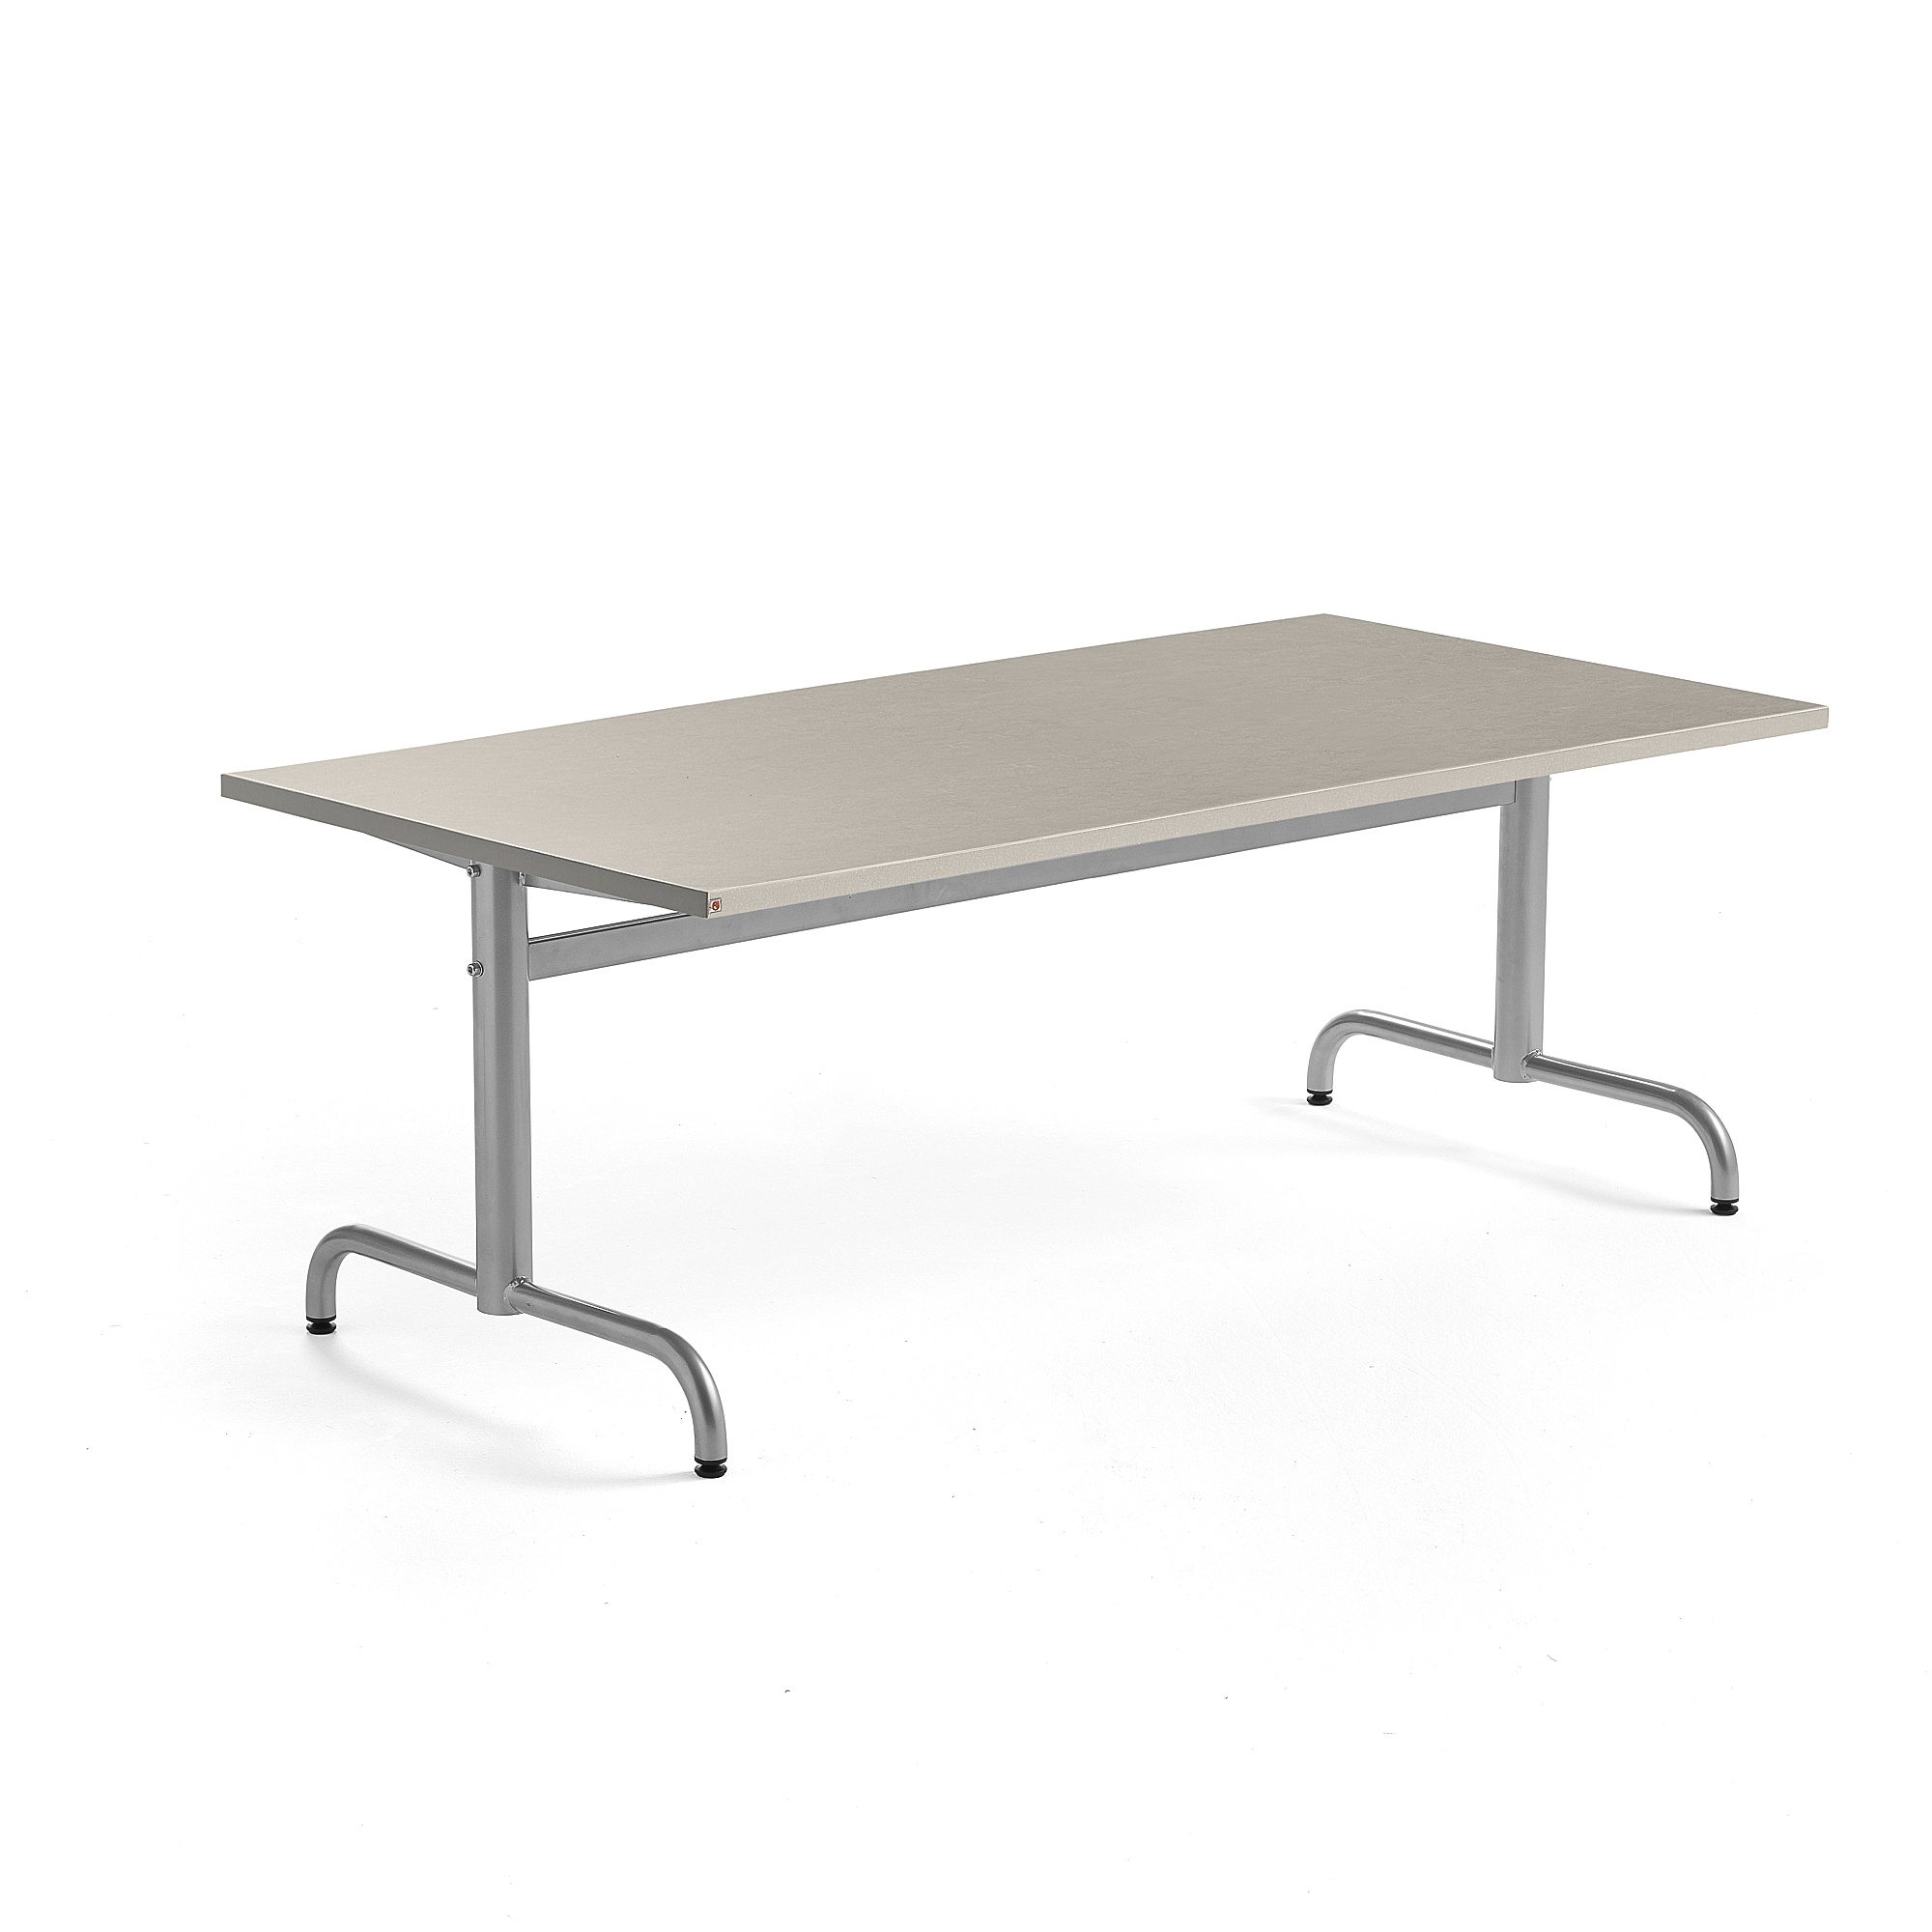 Stůl PLURAL, 1600x800x600 mm, linoleum, šedá, stříbrná